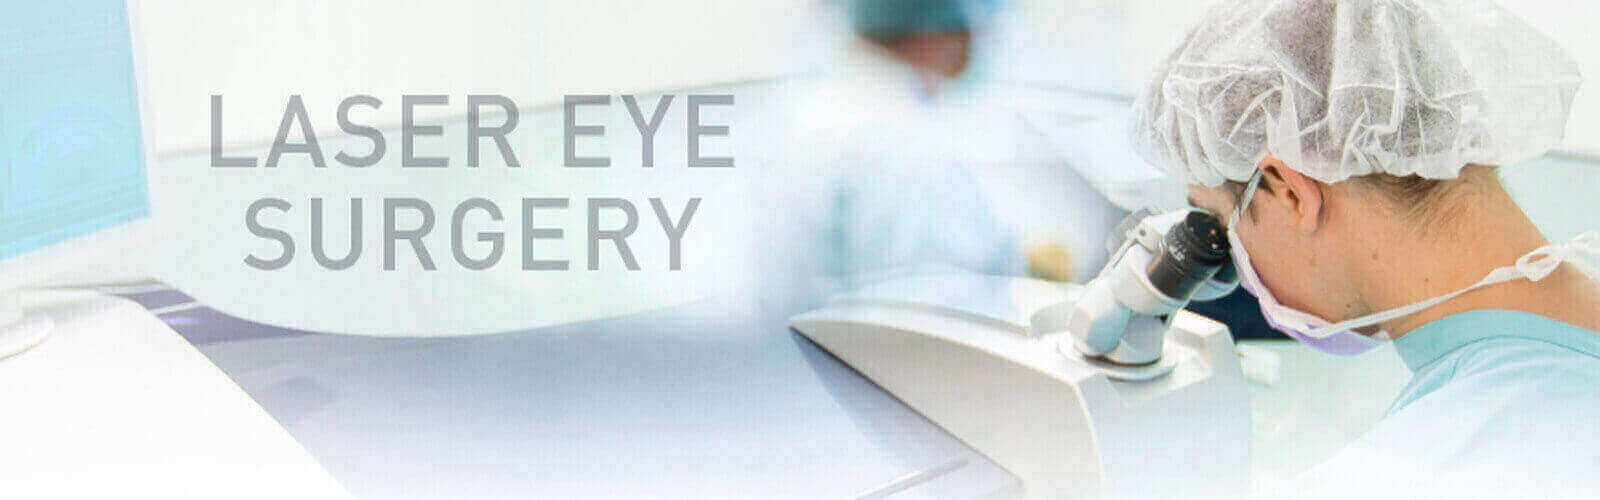 Laser Eye Surgery in Nigeria